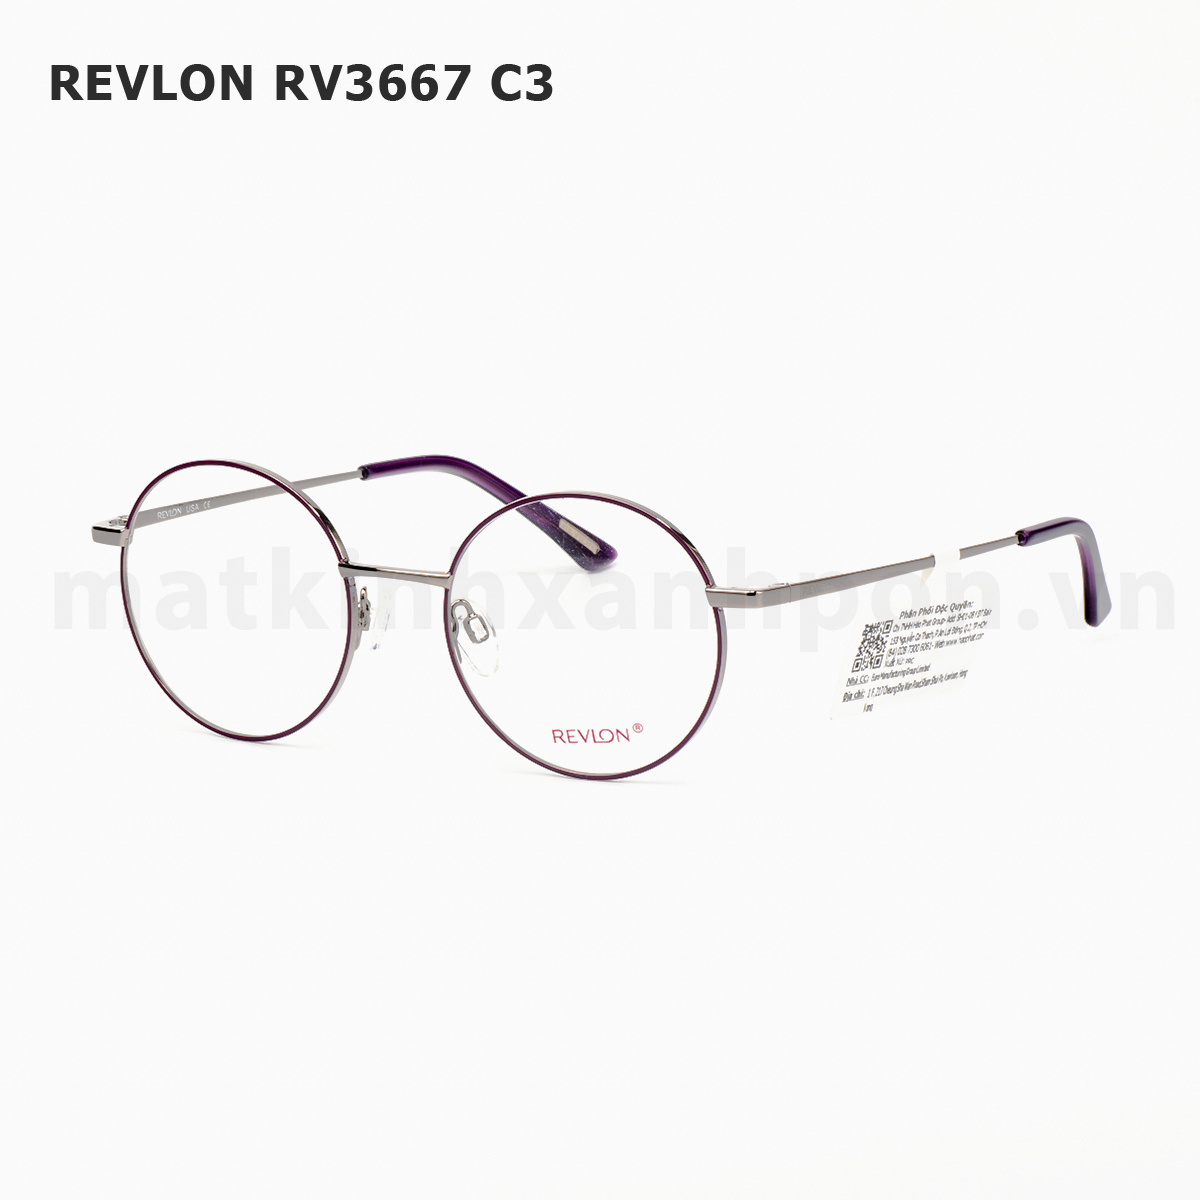 Revlon RV3667 C3